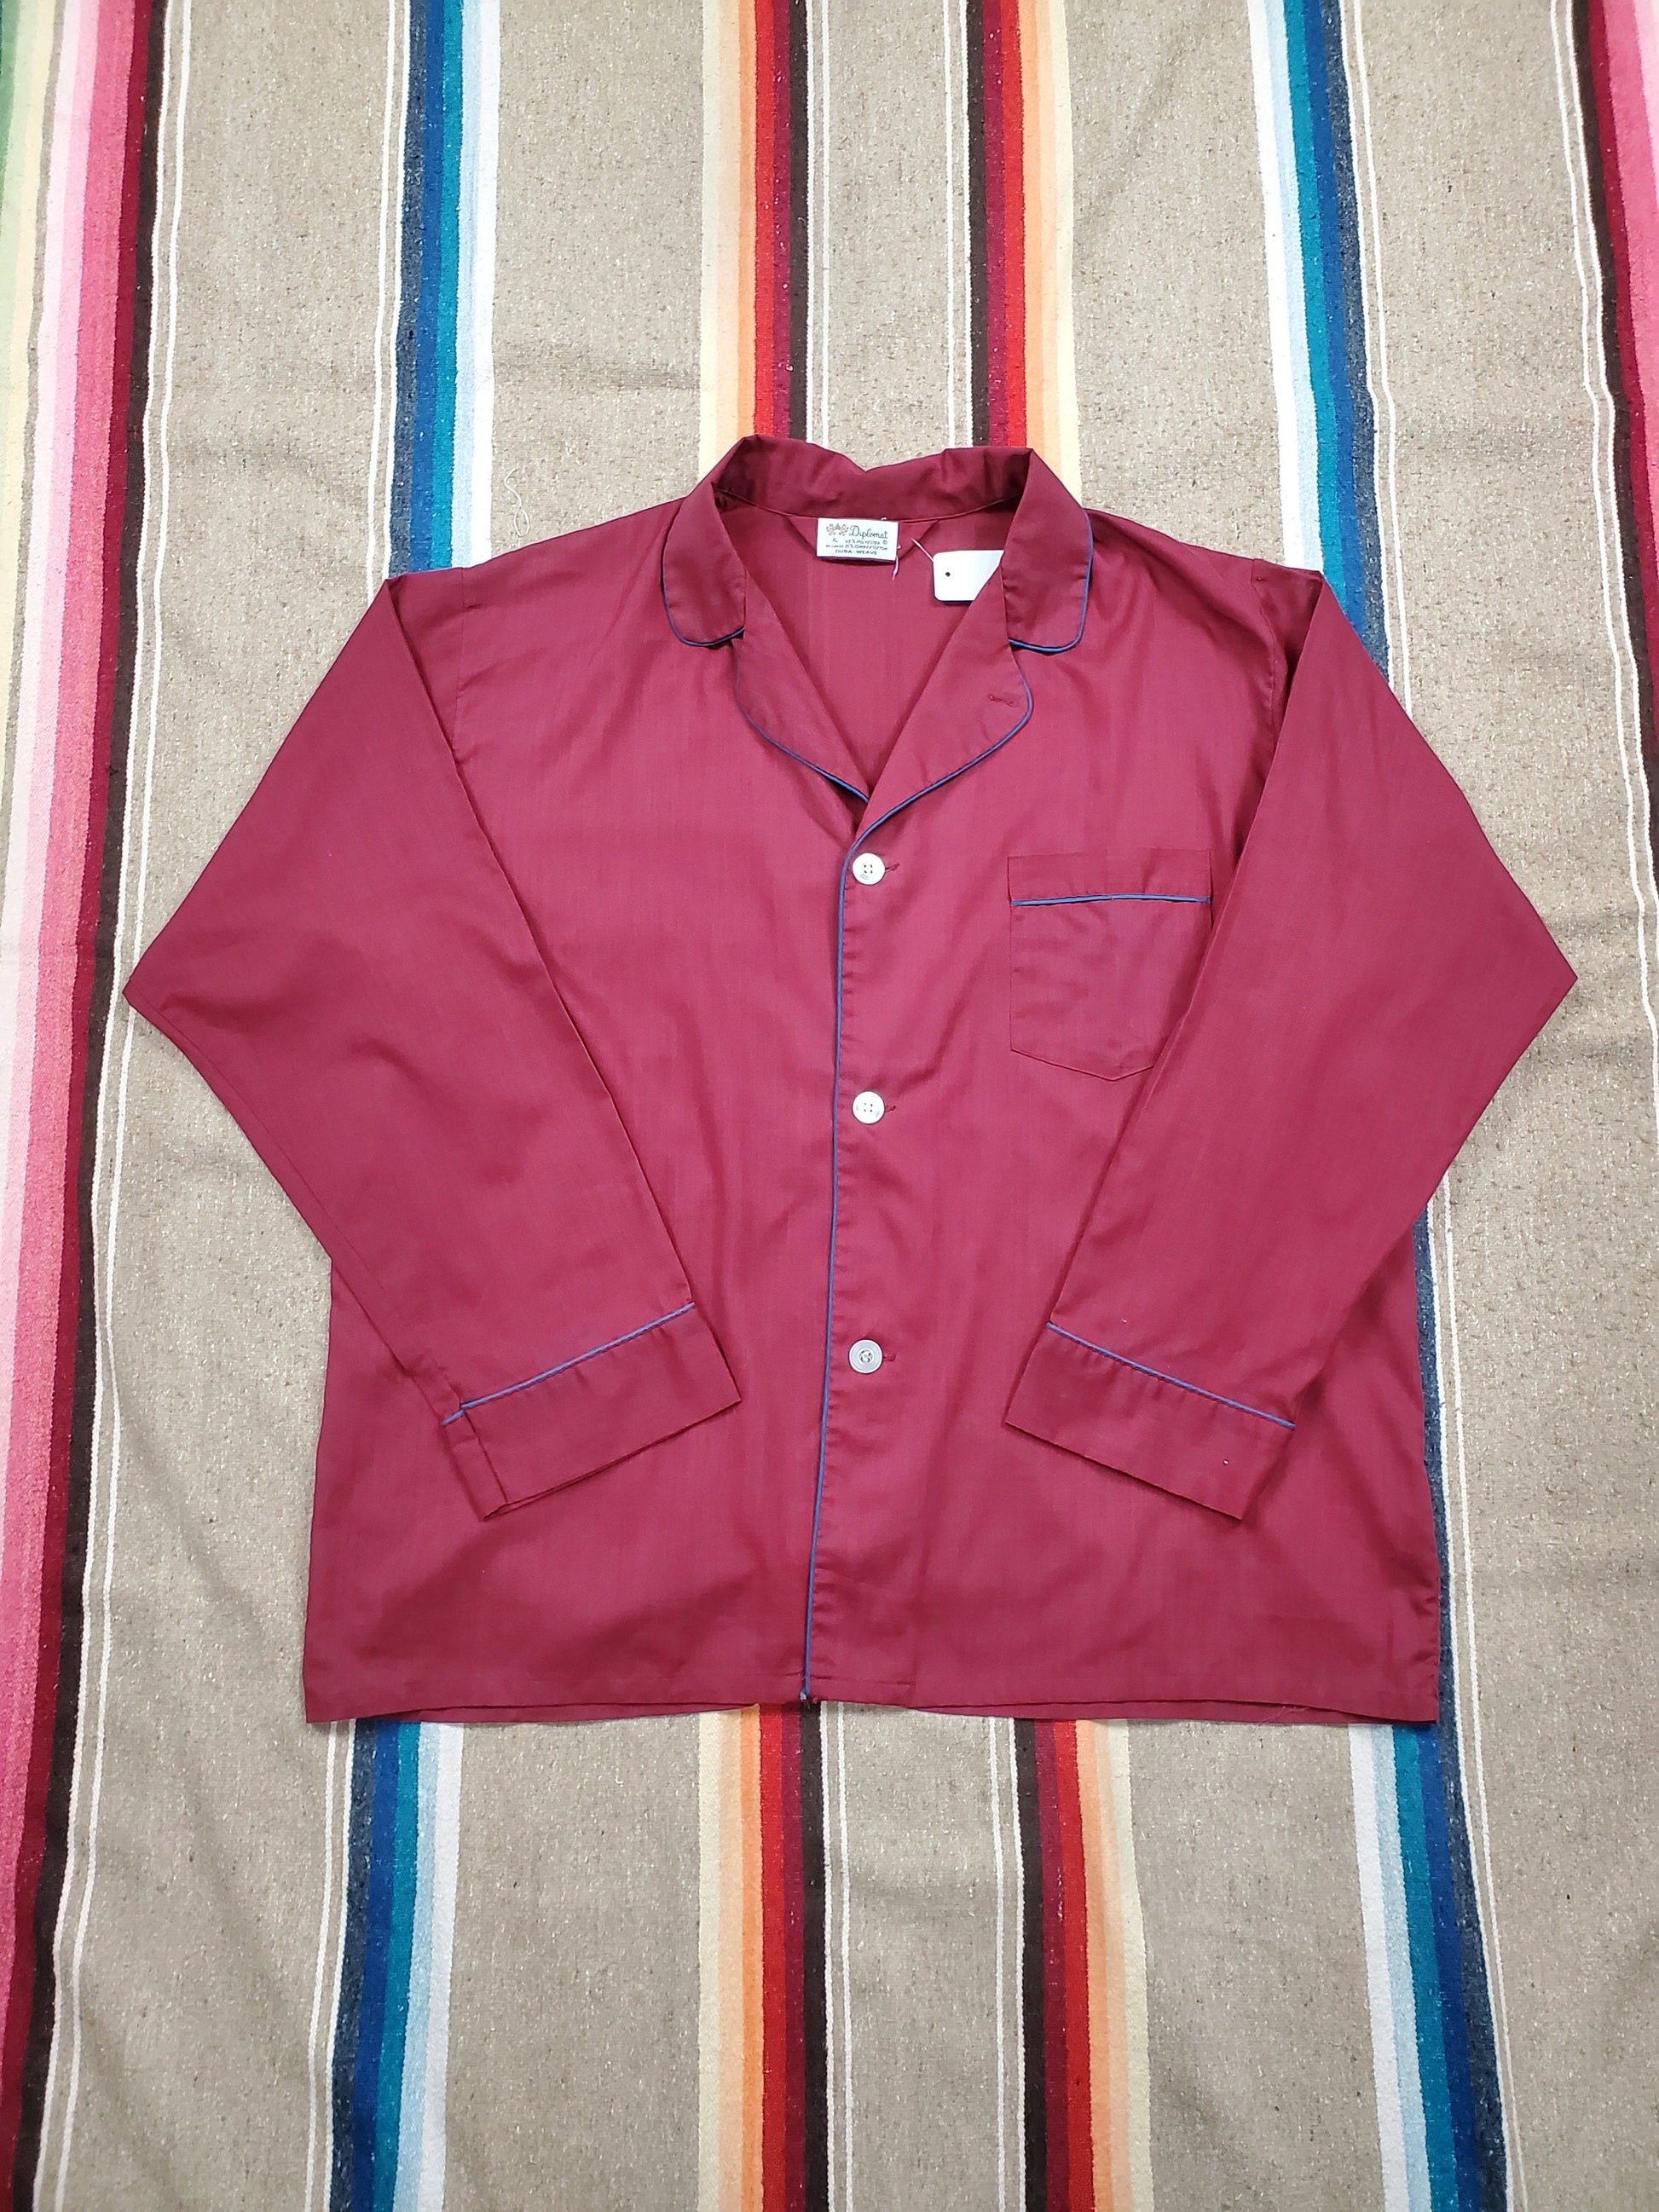 1970s Diplomat Dura-Weave Maroon Button Up Sleep Shirt Size XL